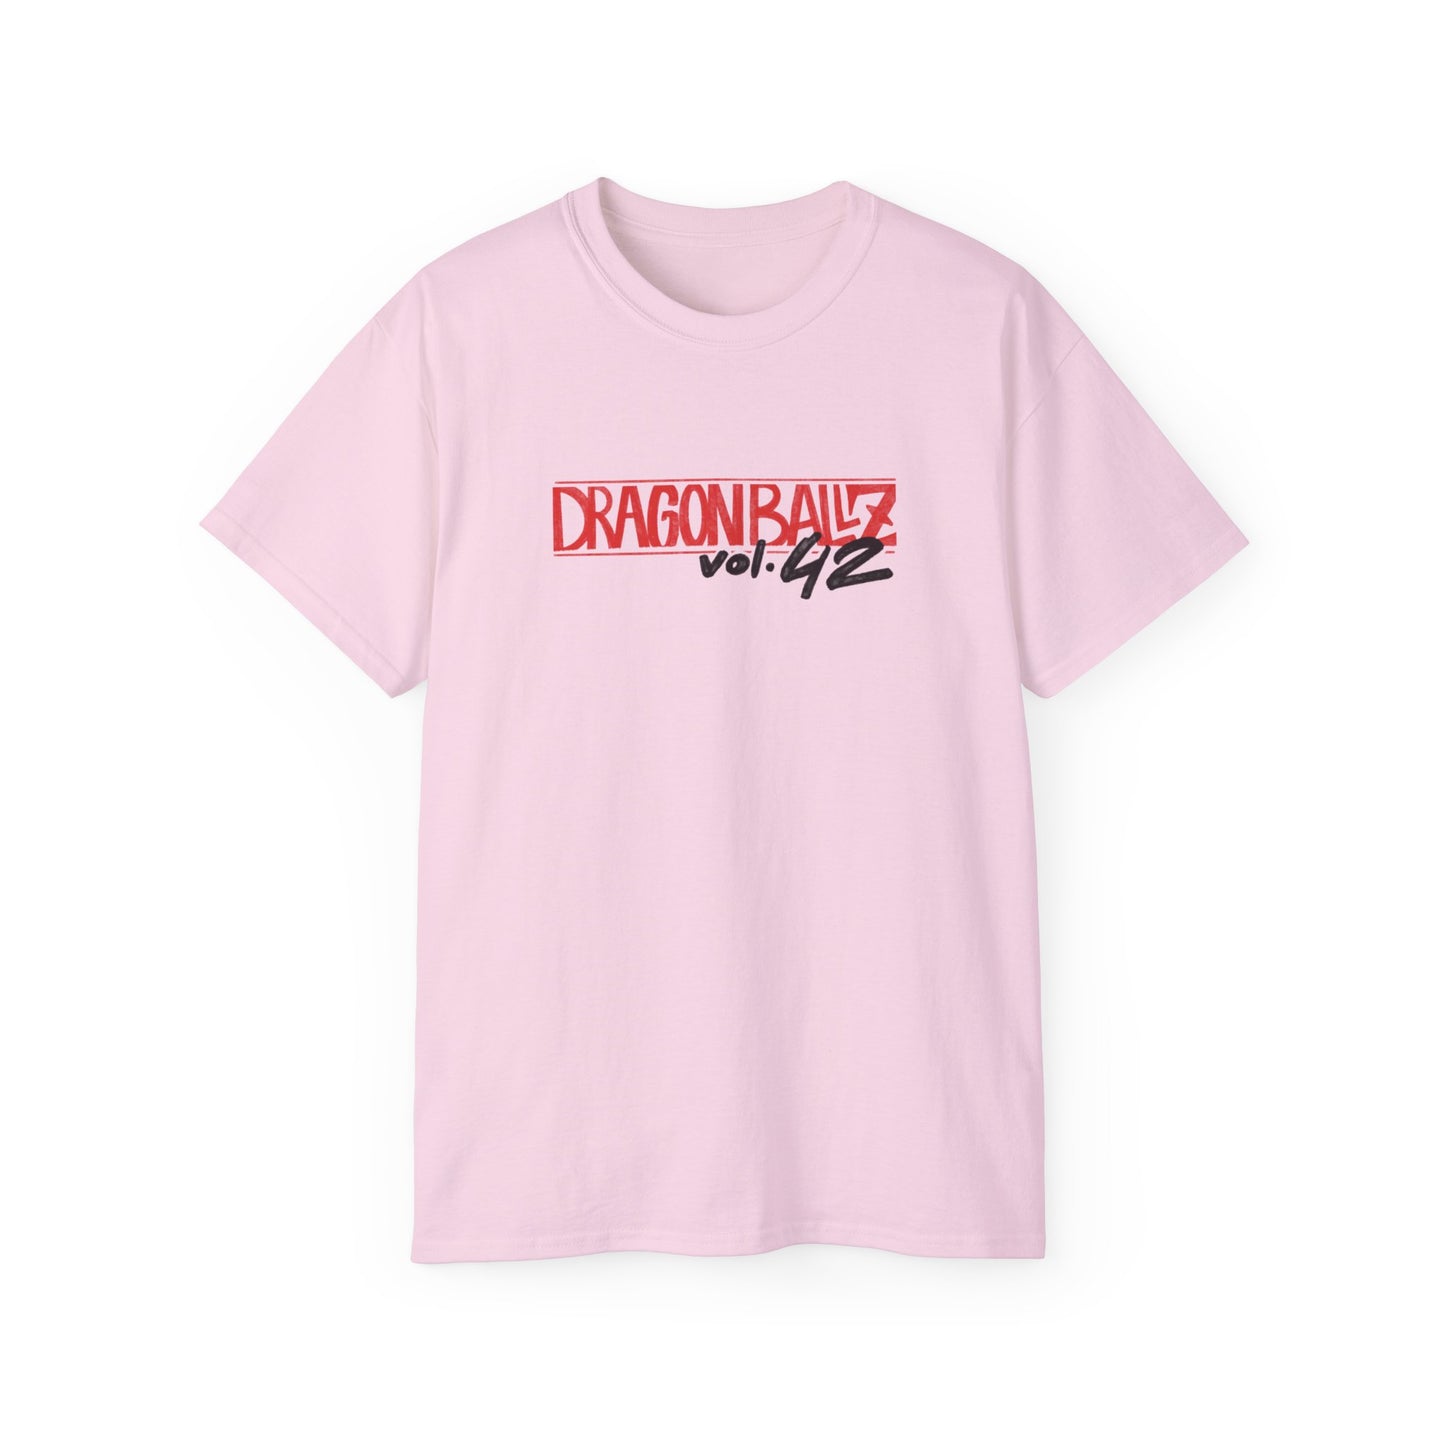 T-Shirt DBZ vol.42 - Alternative cover - Unisex Ultra Cotton Tee